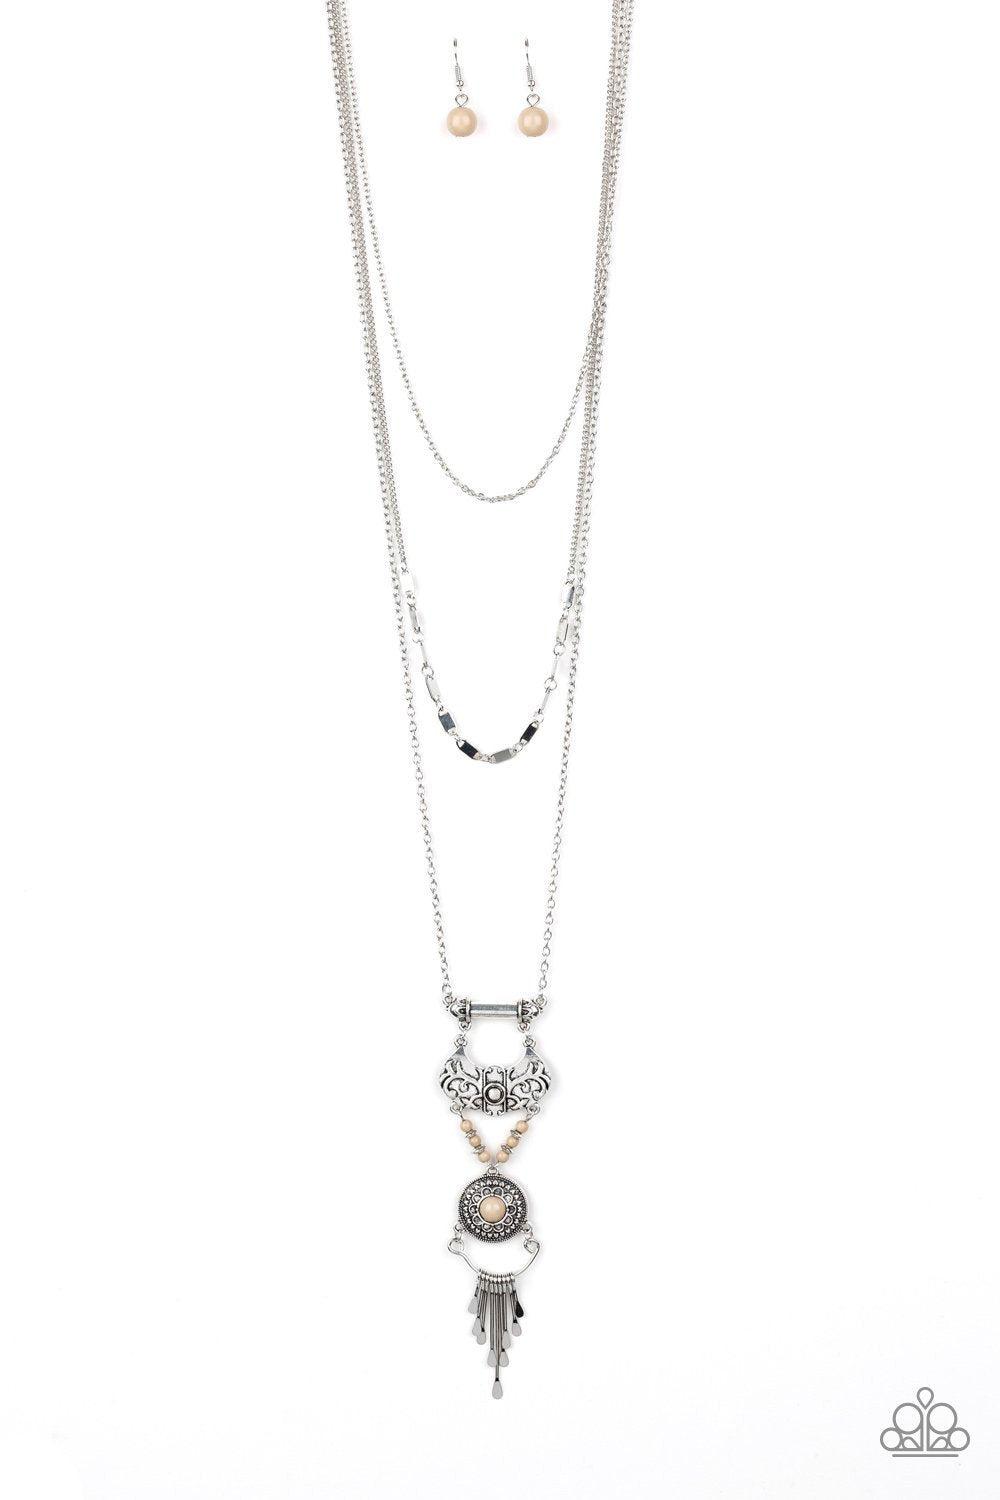 Wildland Wonderland Brown Necklace - Paparazzi Accessories - lightbox -CarasShop.com - $5 Jewelry by Cara Jewels